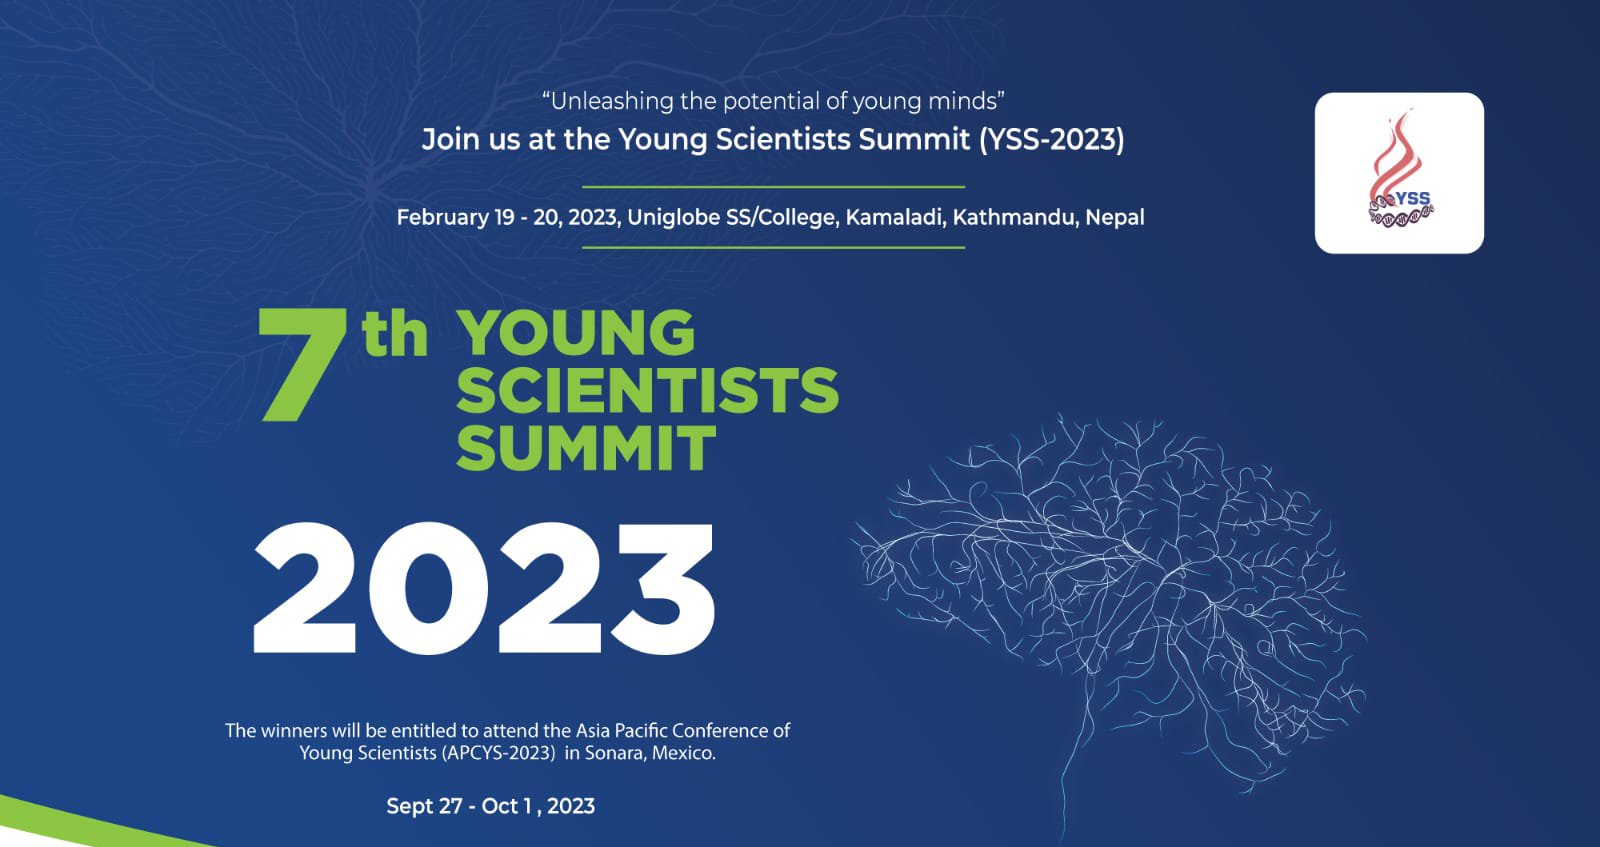 7th Young Scientist Summit 2023 in Uniglobe College